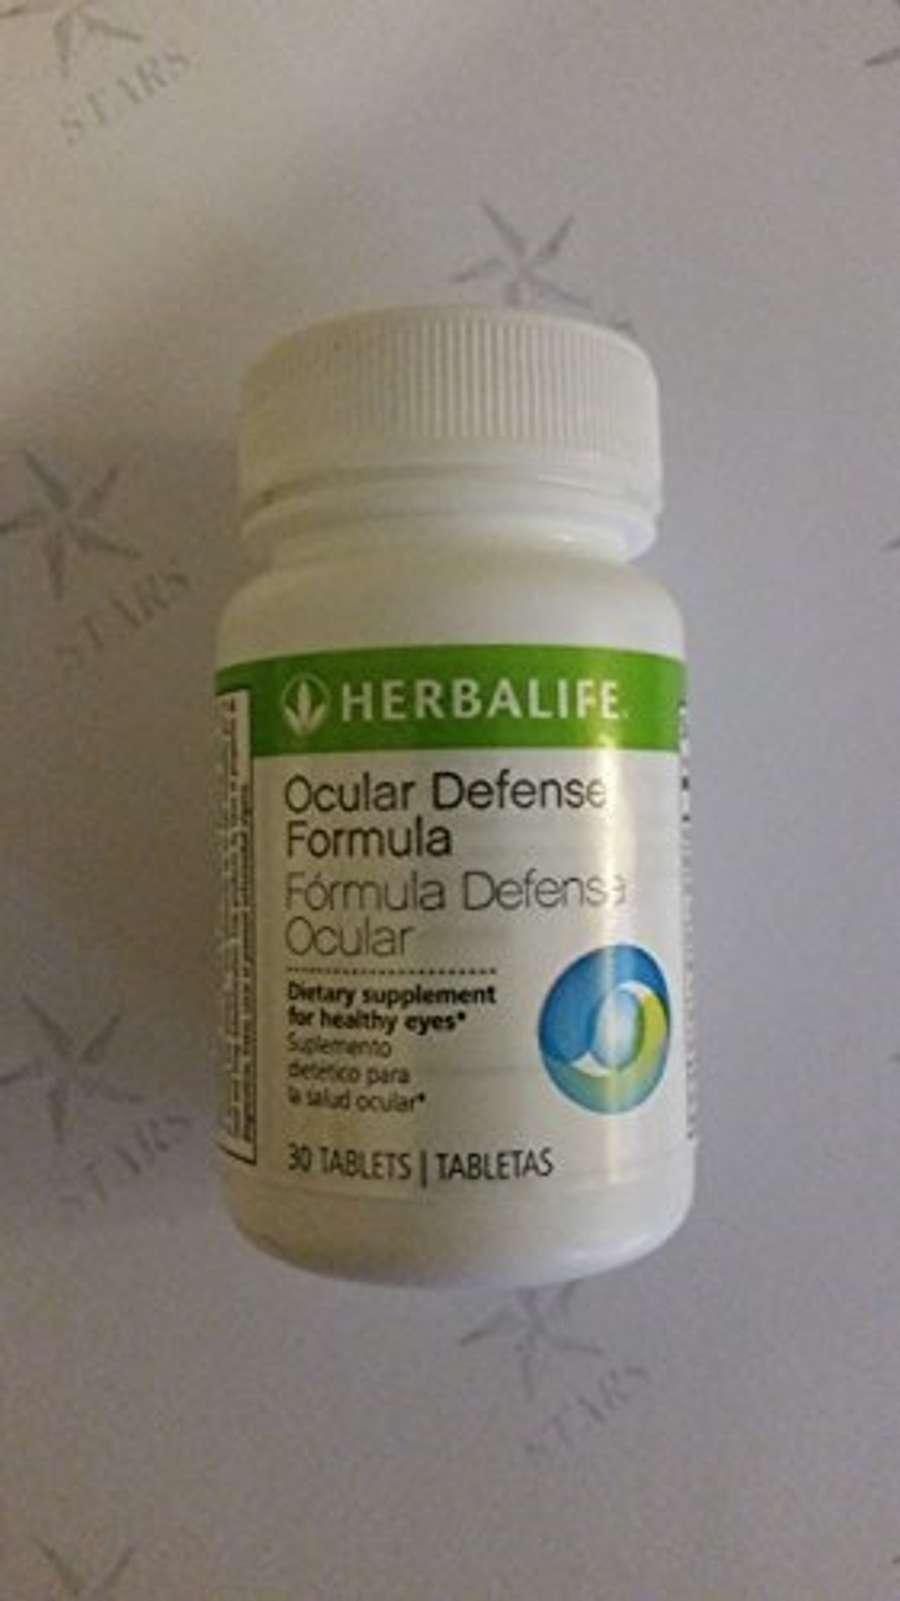 [USA]_Herbalife Ocular Defense Formula for Your Eye Health! - 30 Tablets